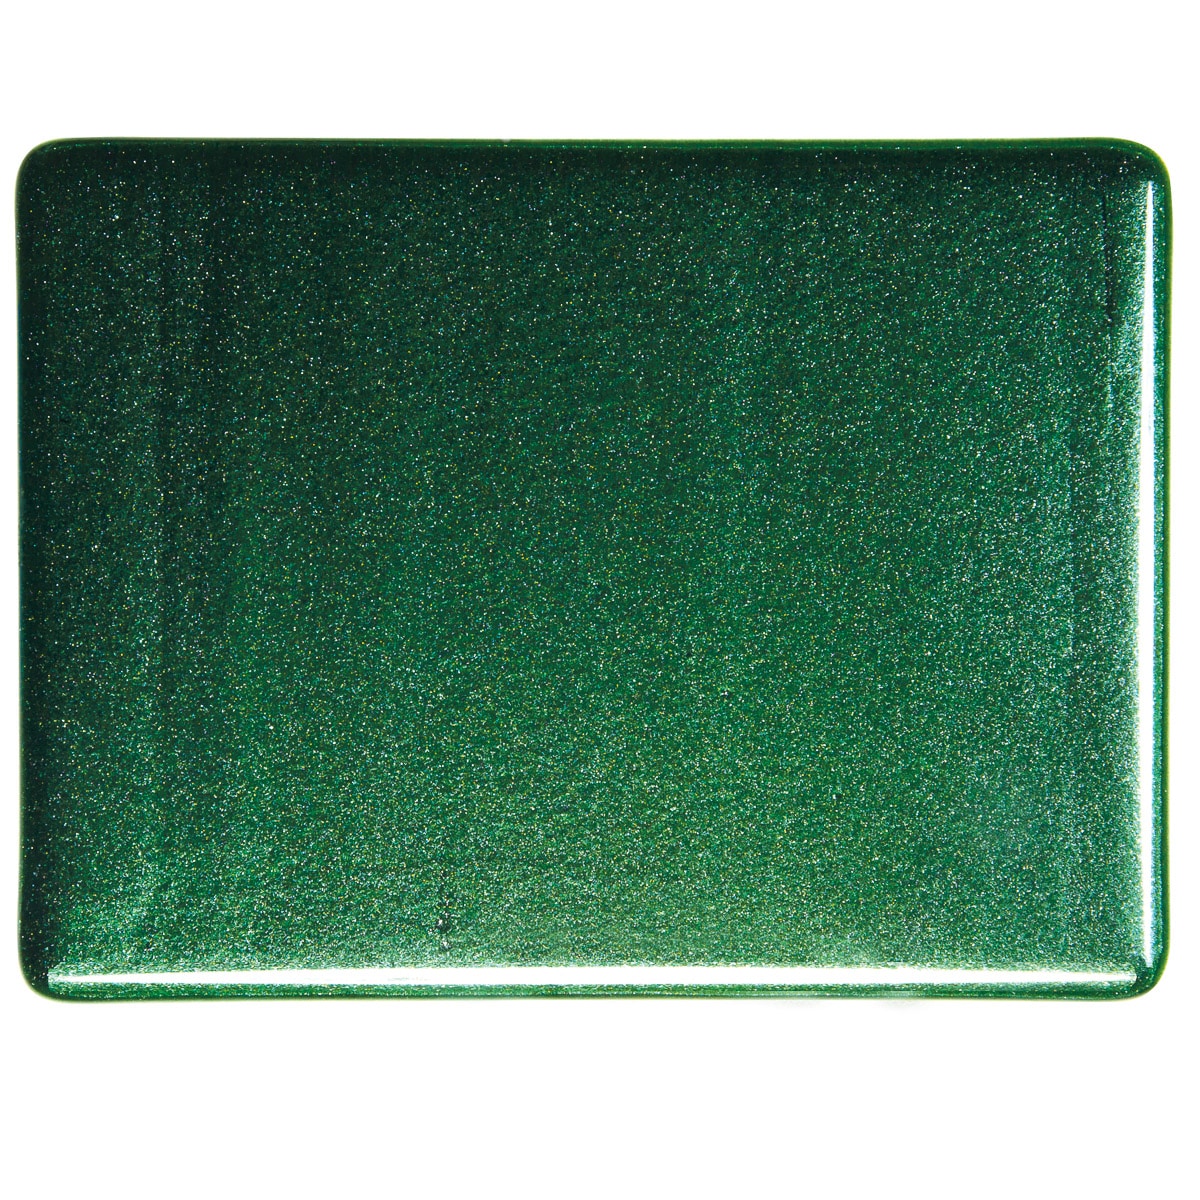 001112 Transparent Aventurine Green sheet glass swatch